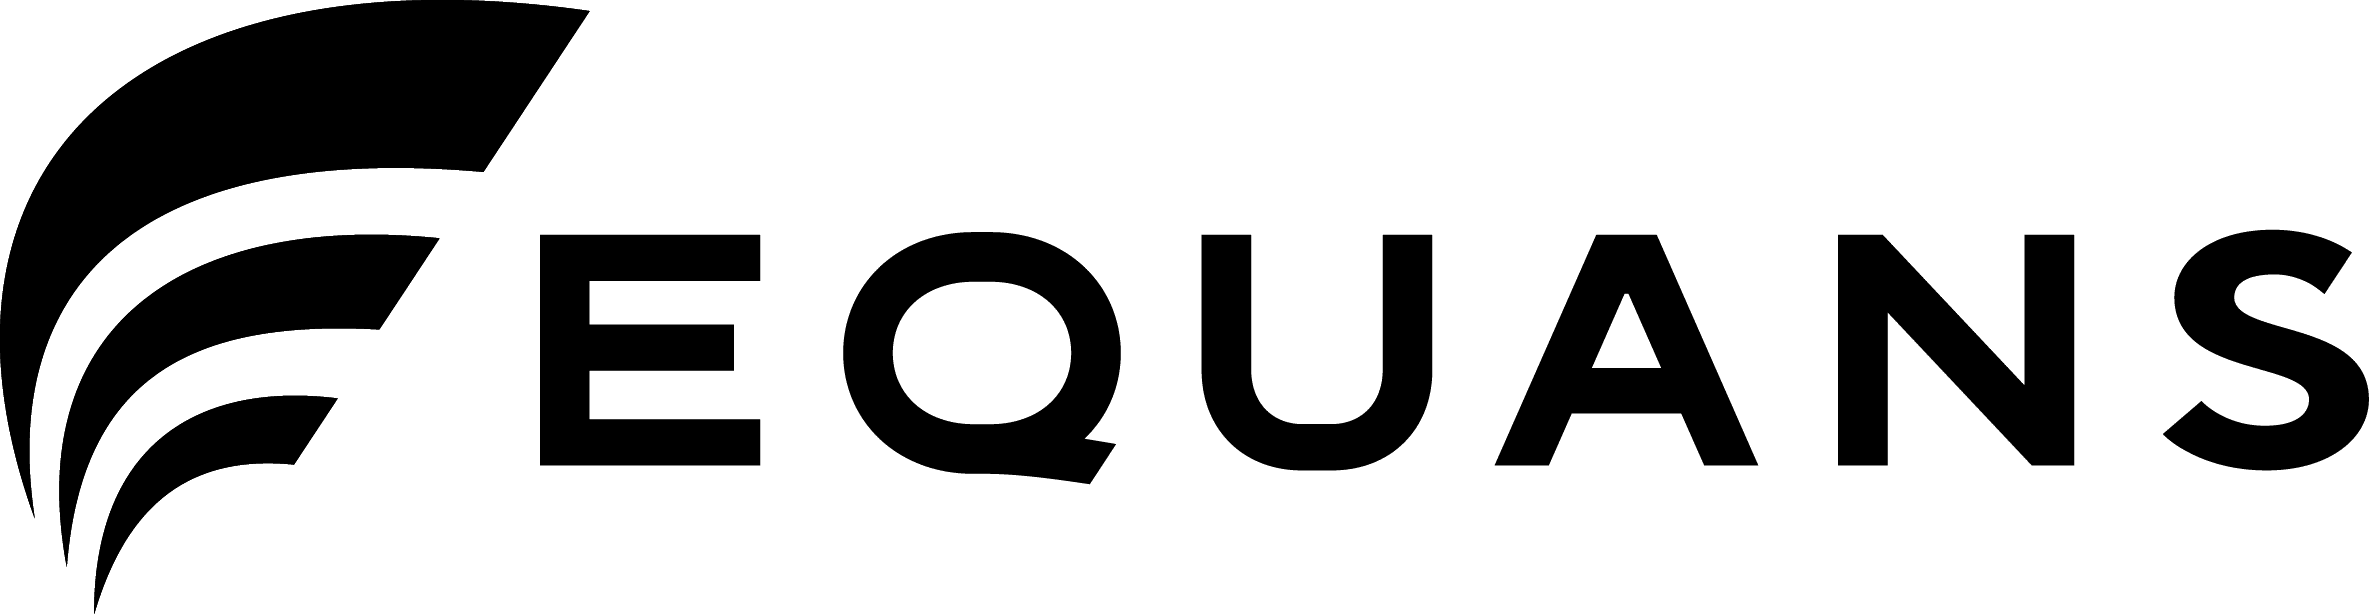 EQUANS Logo_Black